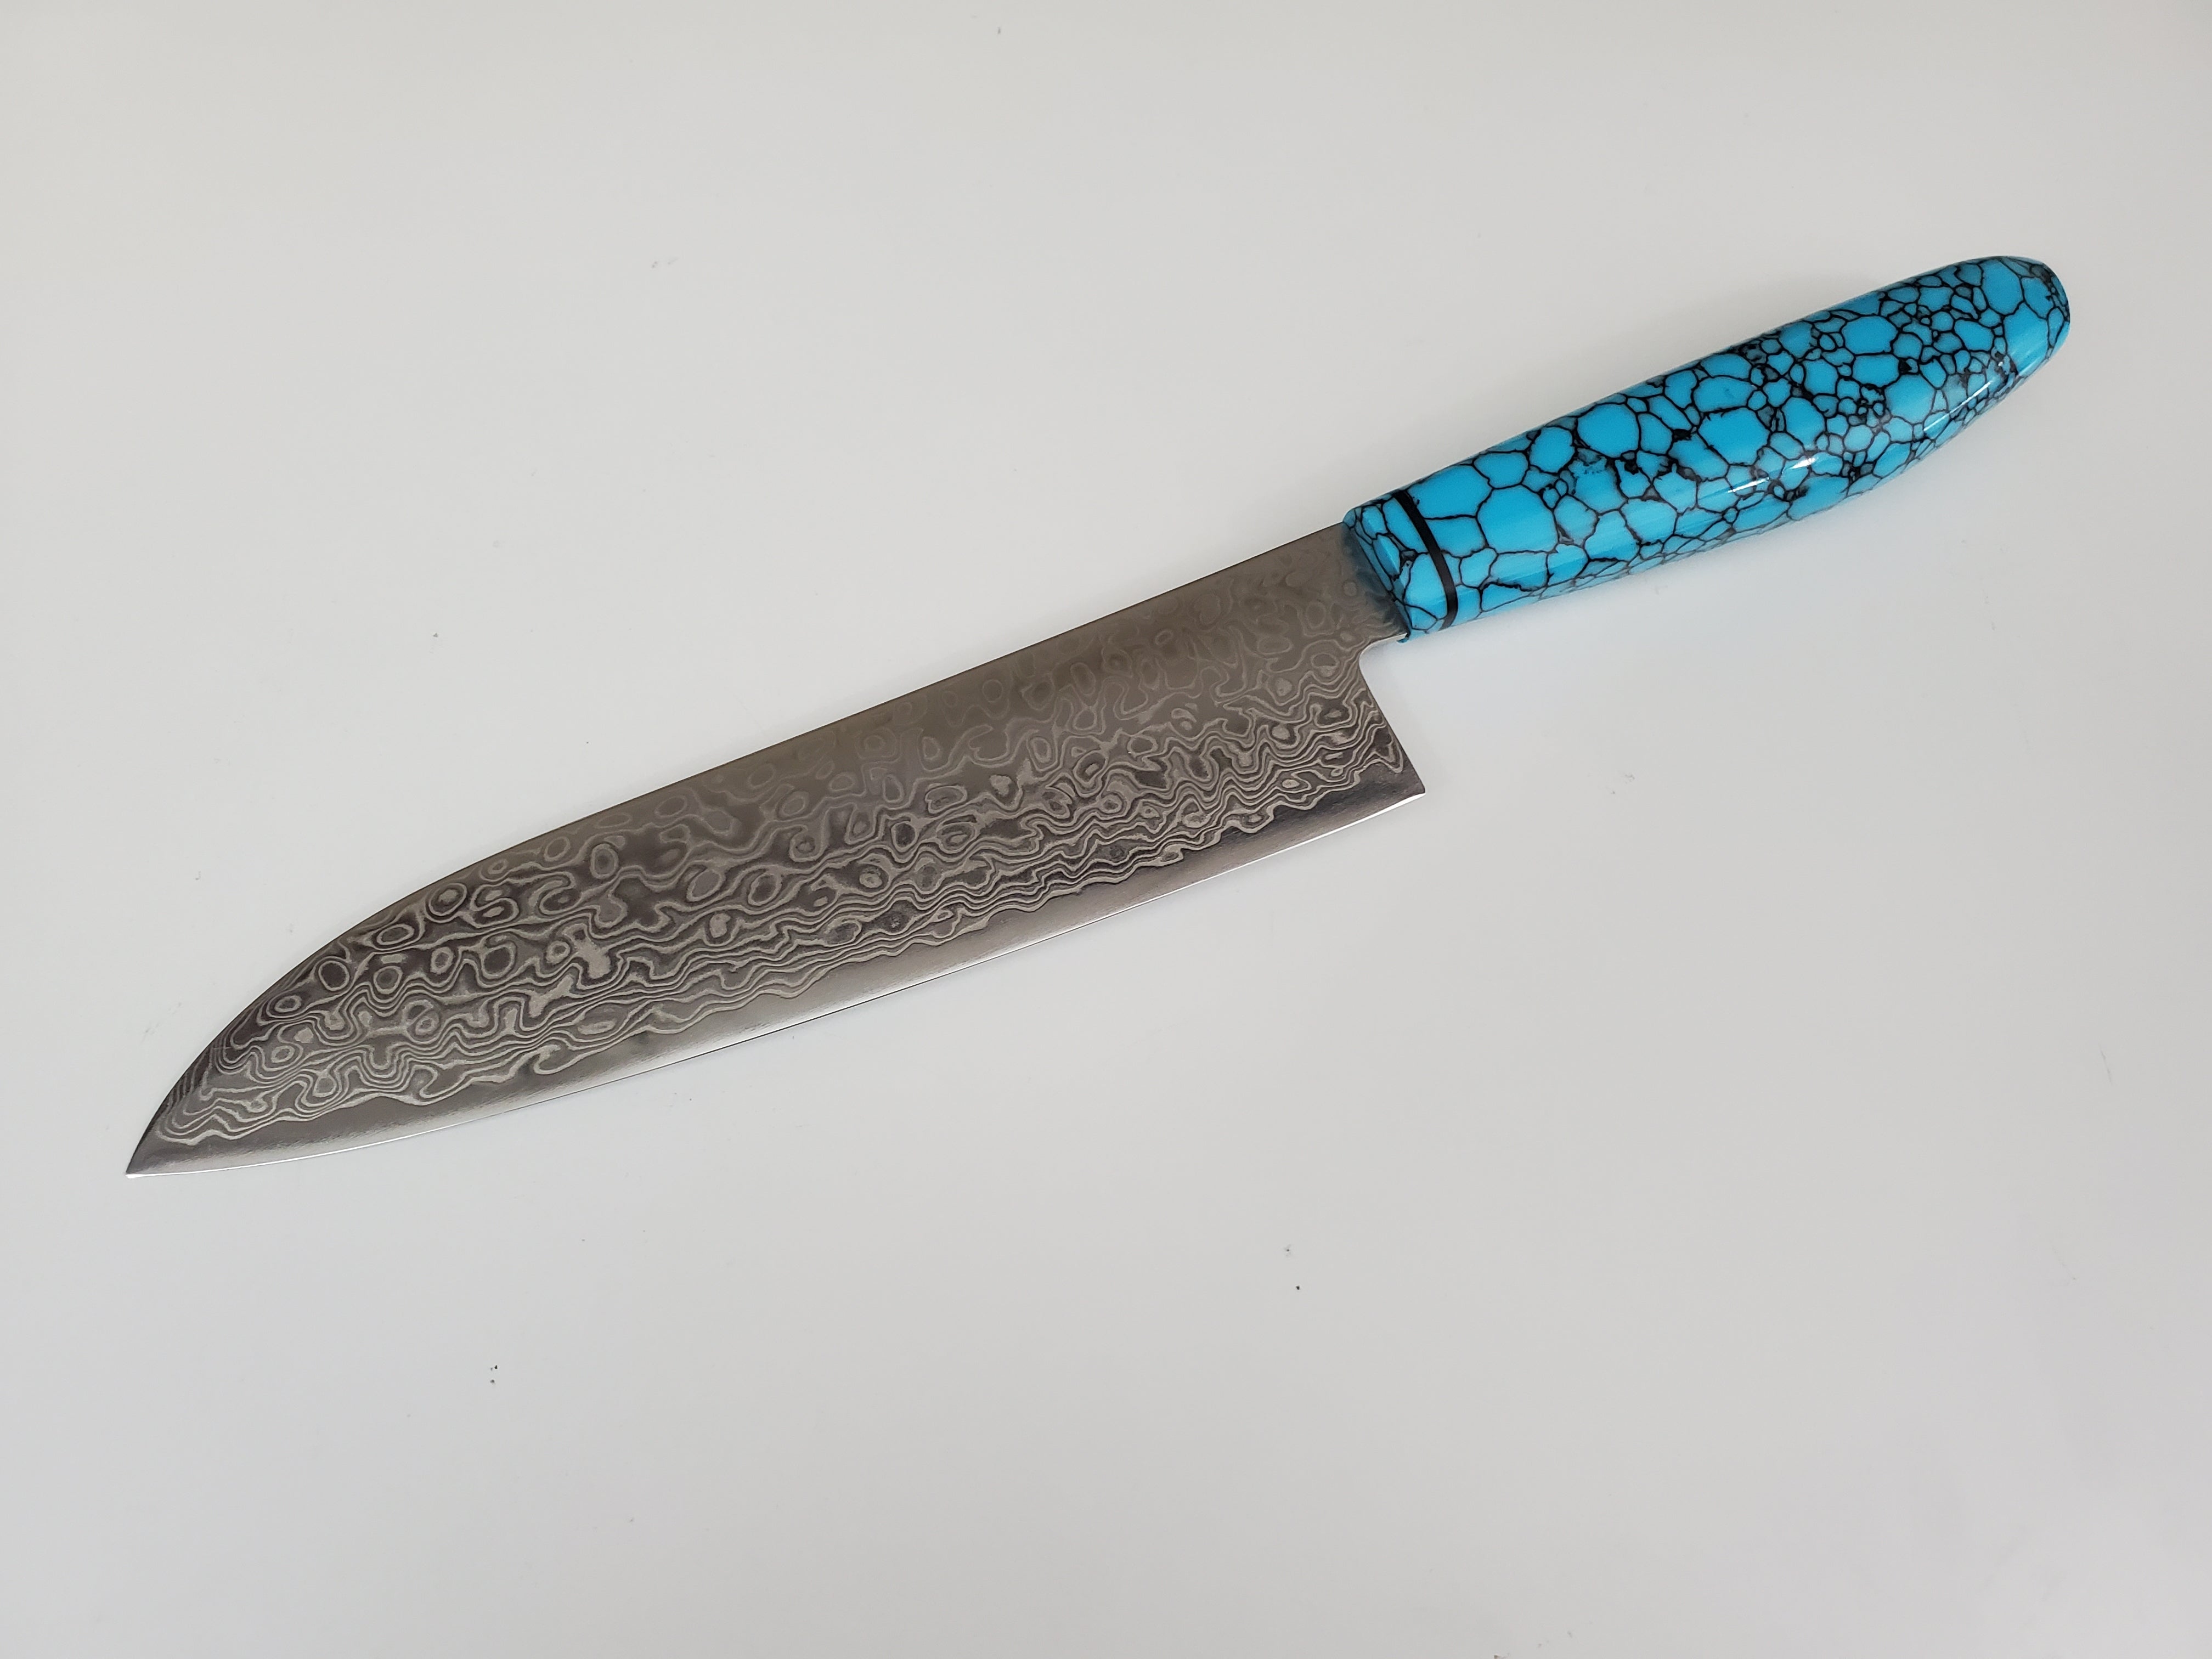 ZA18 Damascus Santoku chef knife - 180mm